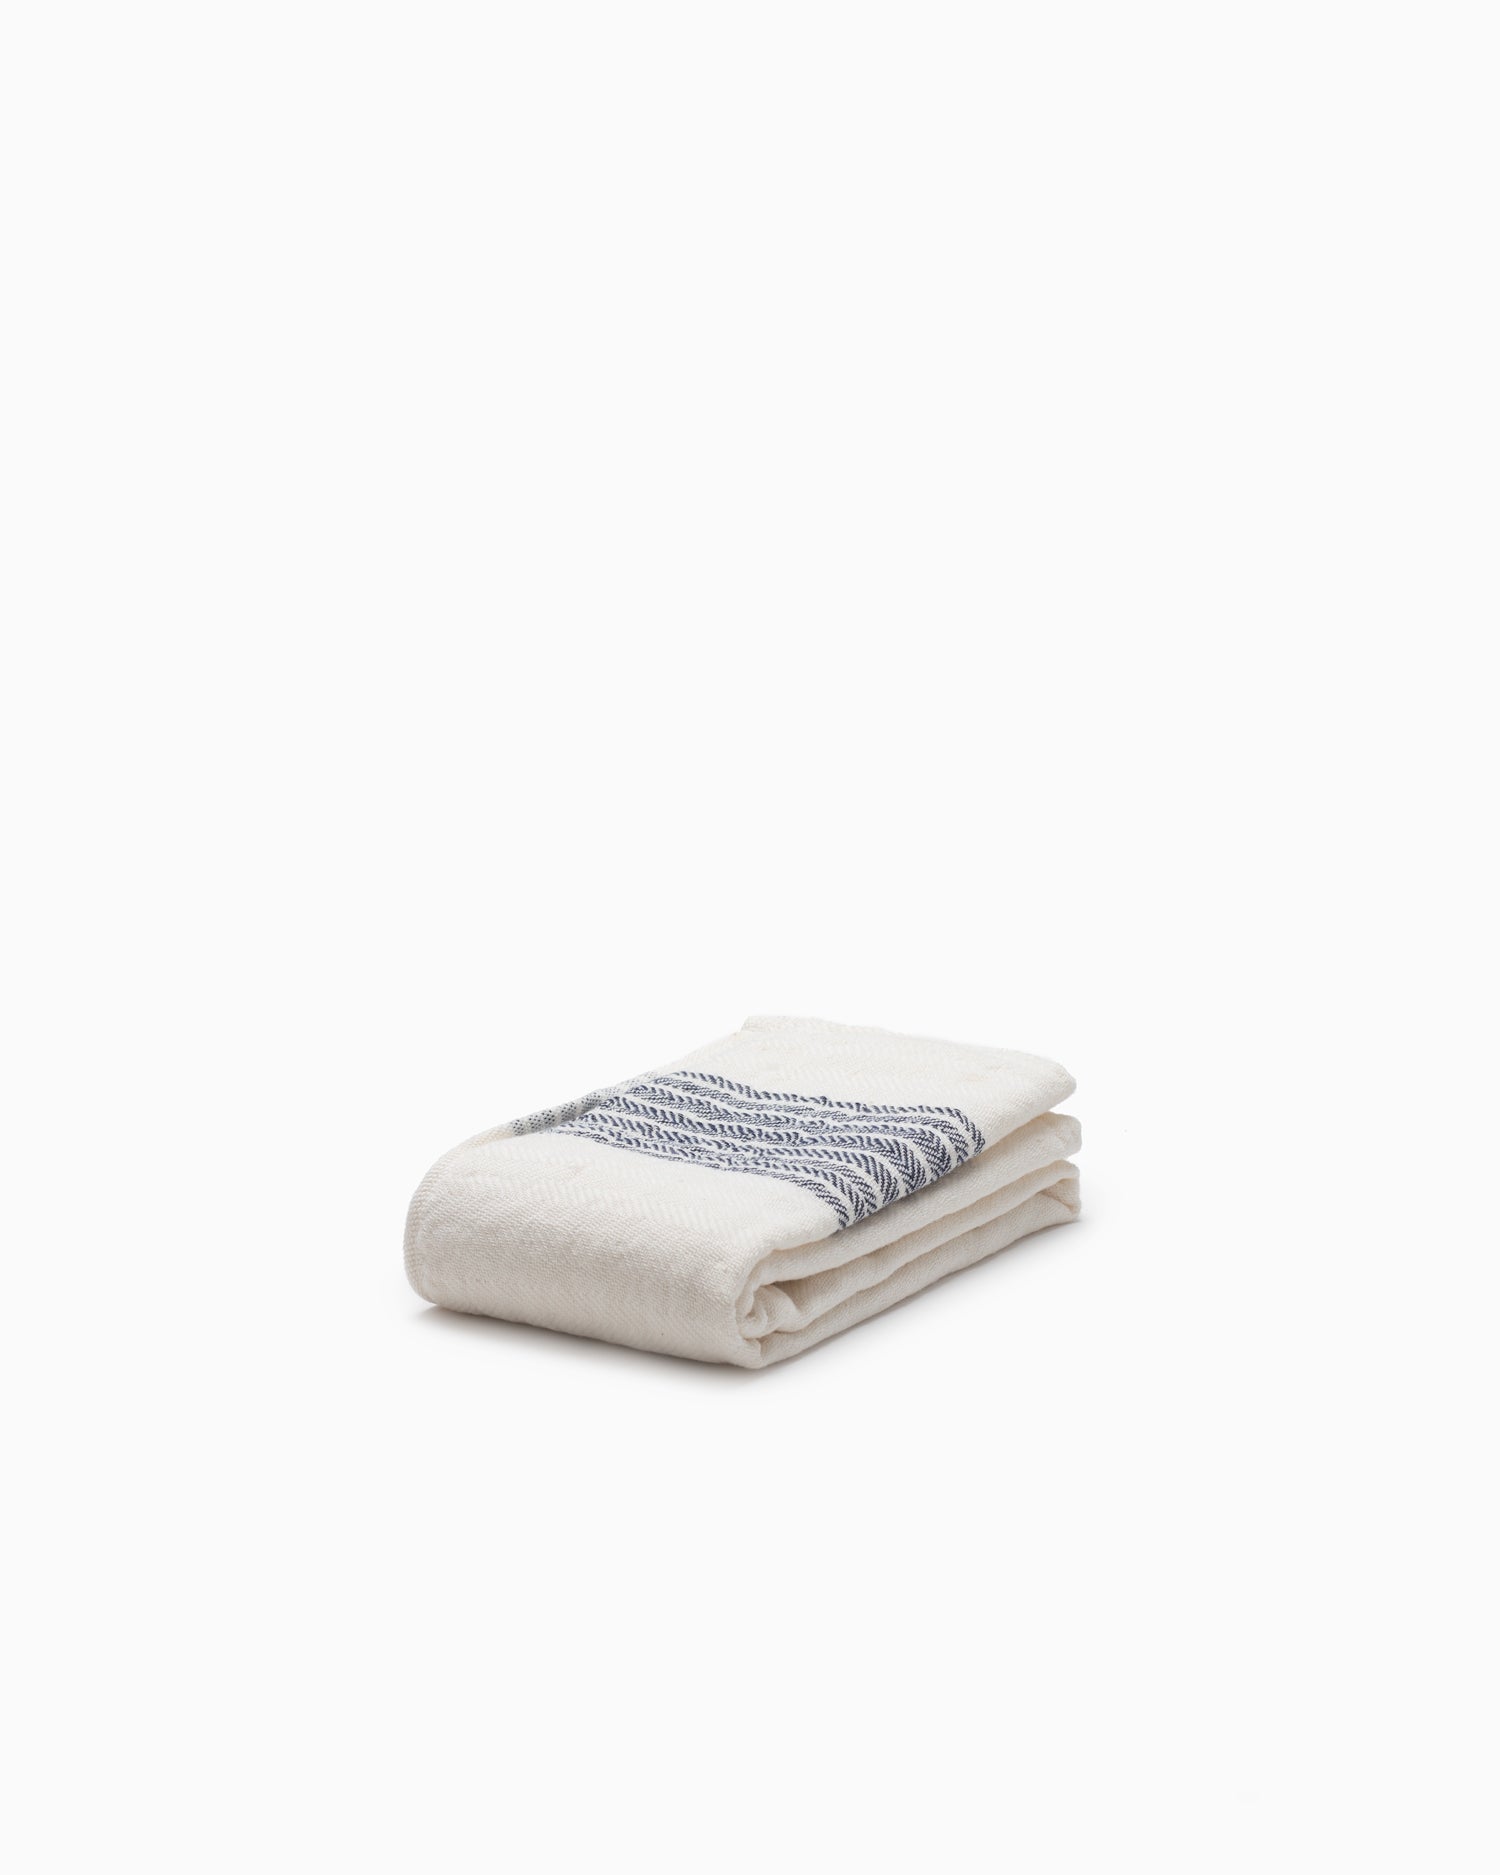 Flax Line Organic Hand Towel - Navy/Ivory